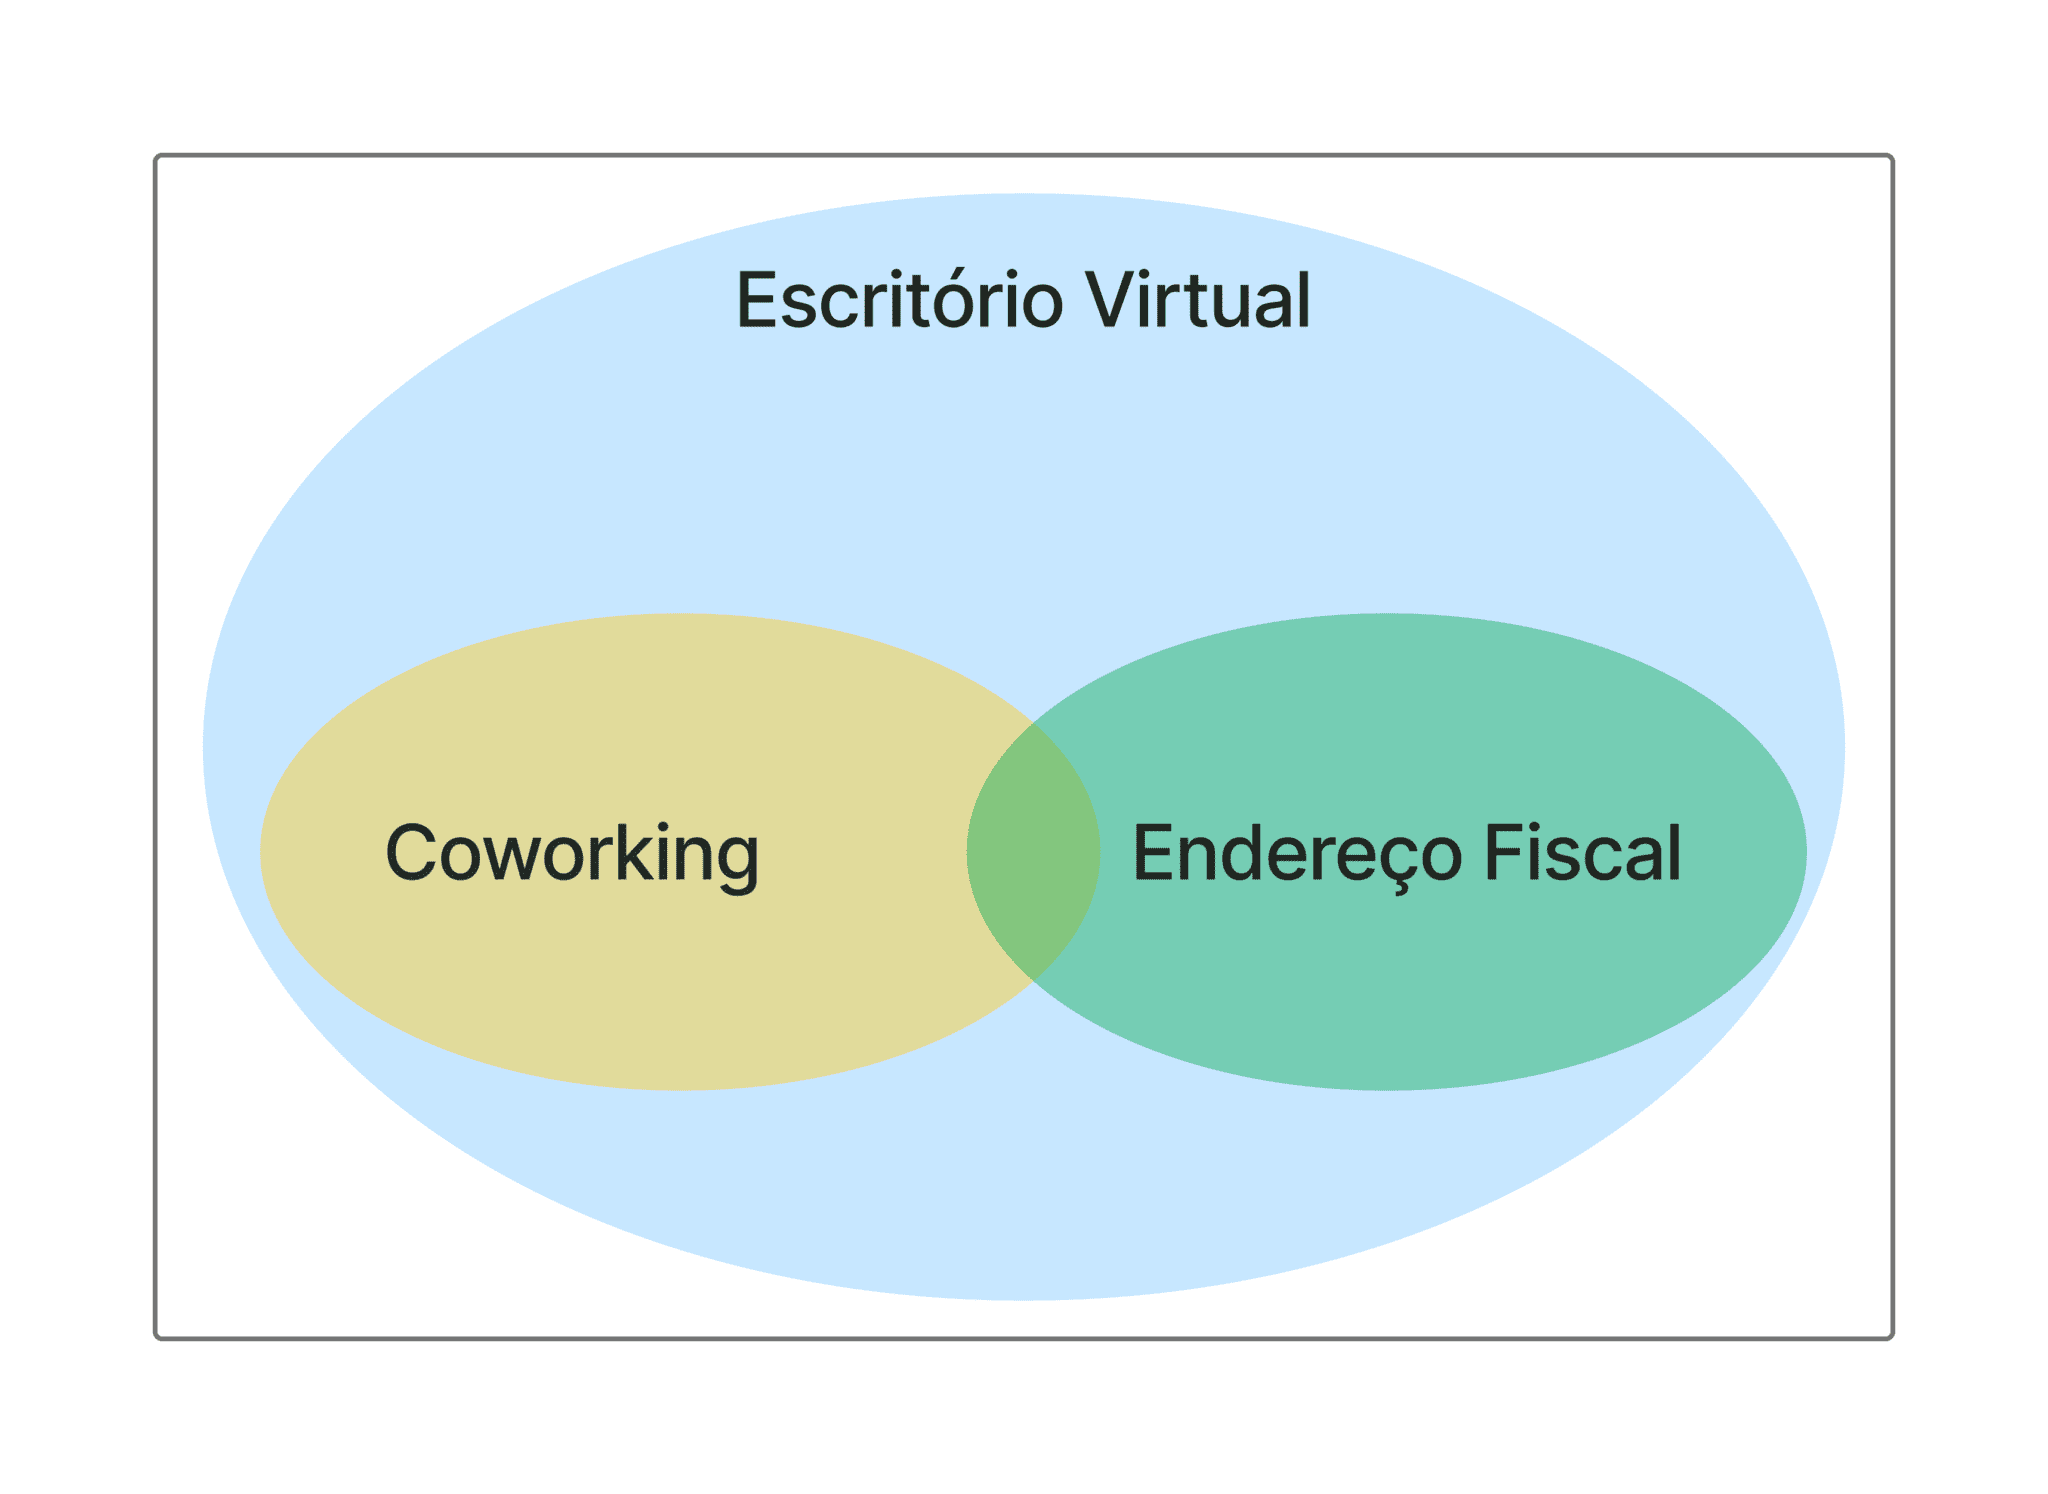 Escritório Virtual Vs Coworking Vs Endereço Fiscal (Suitebras.com)